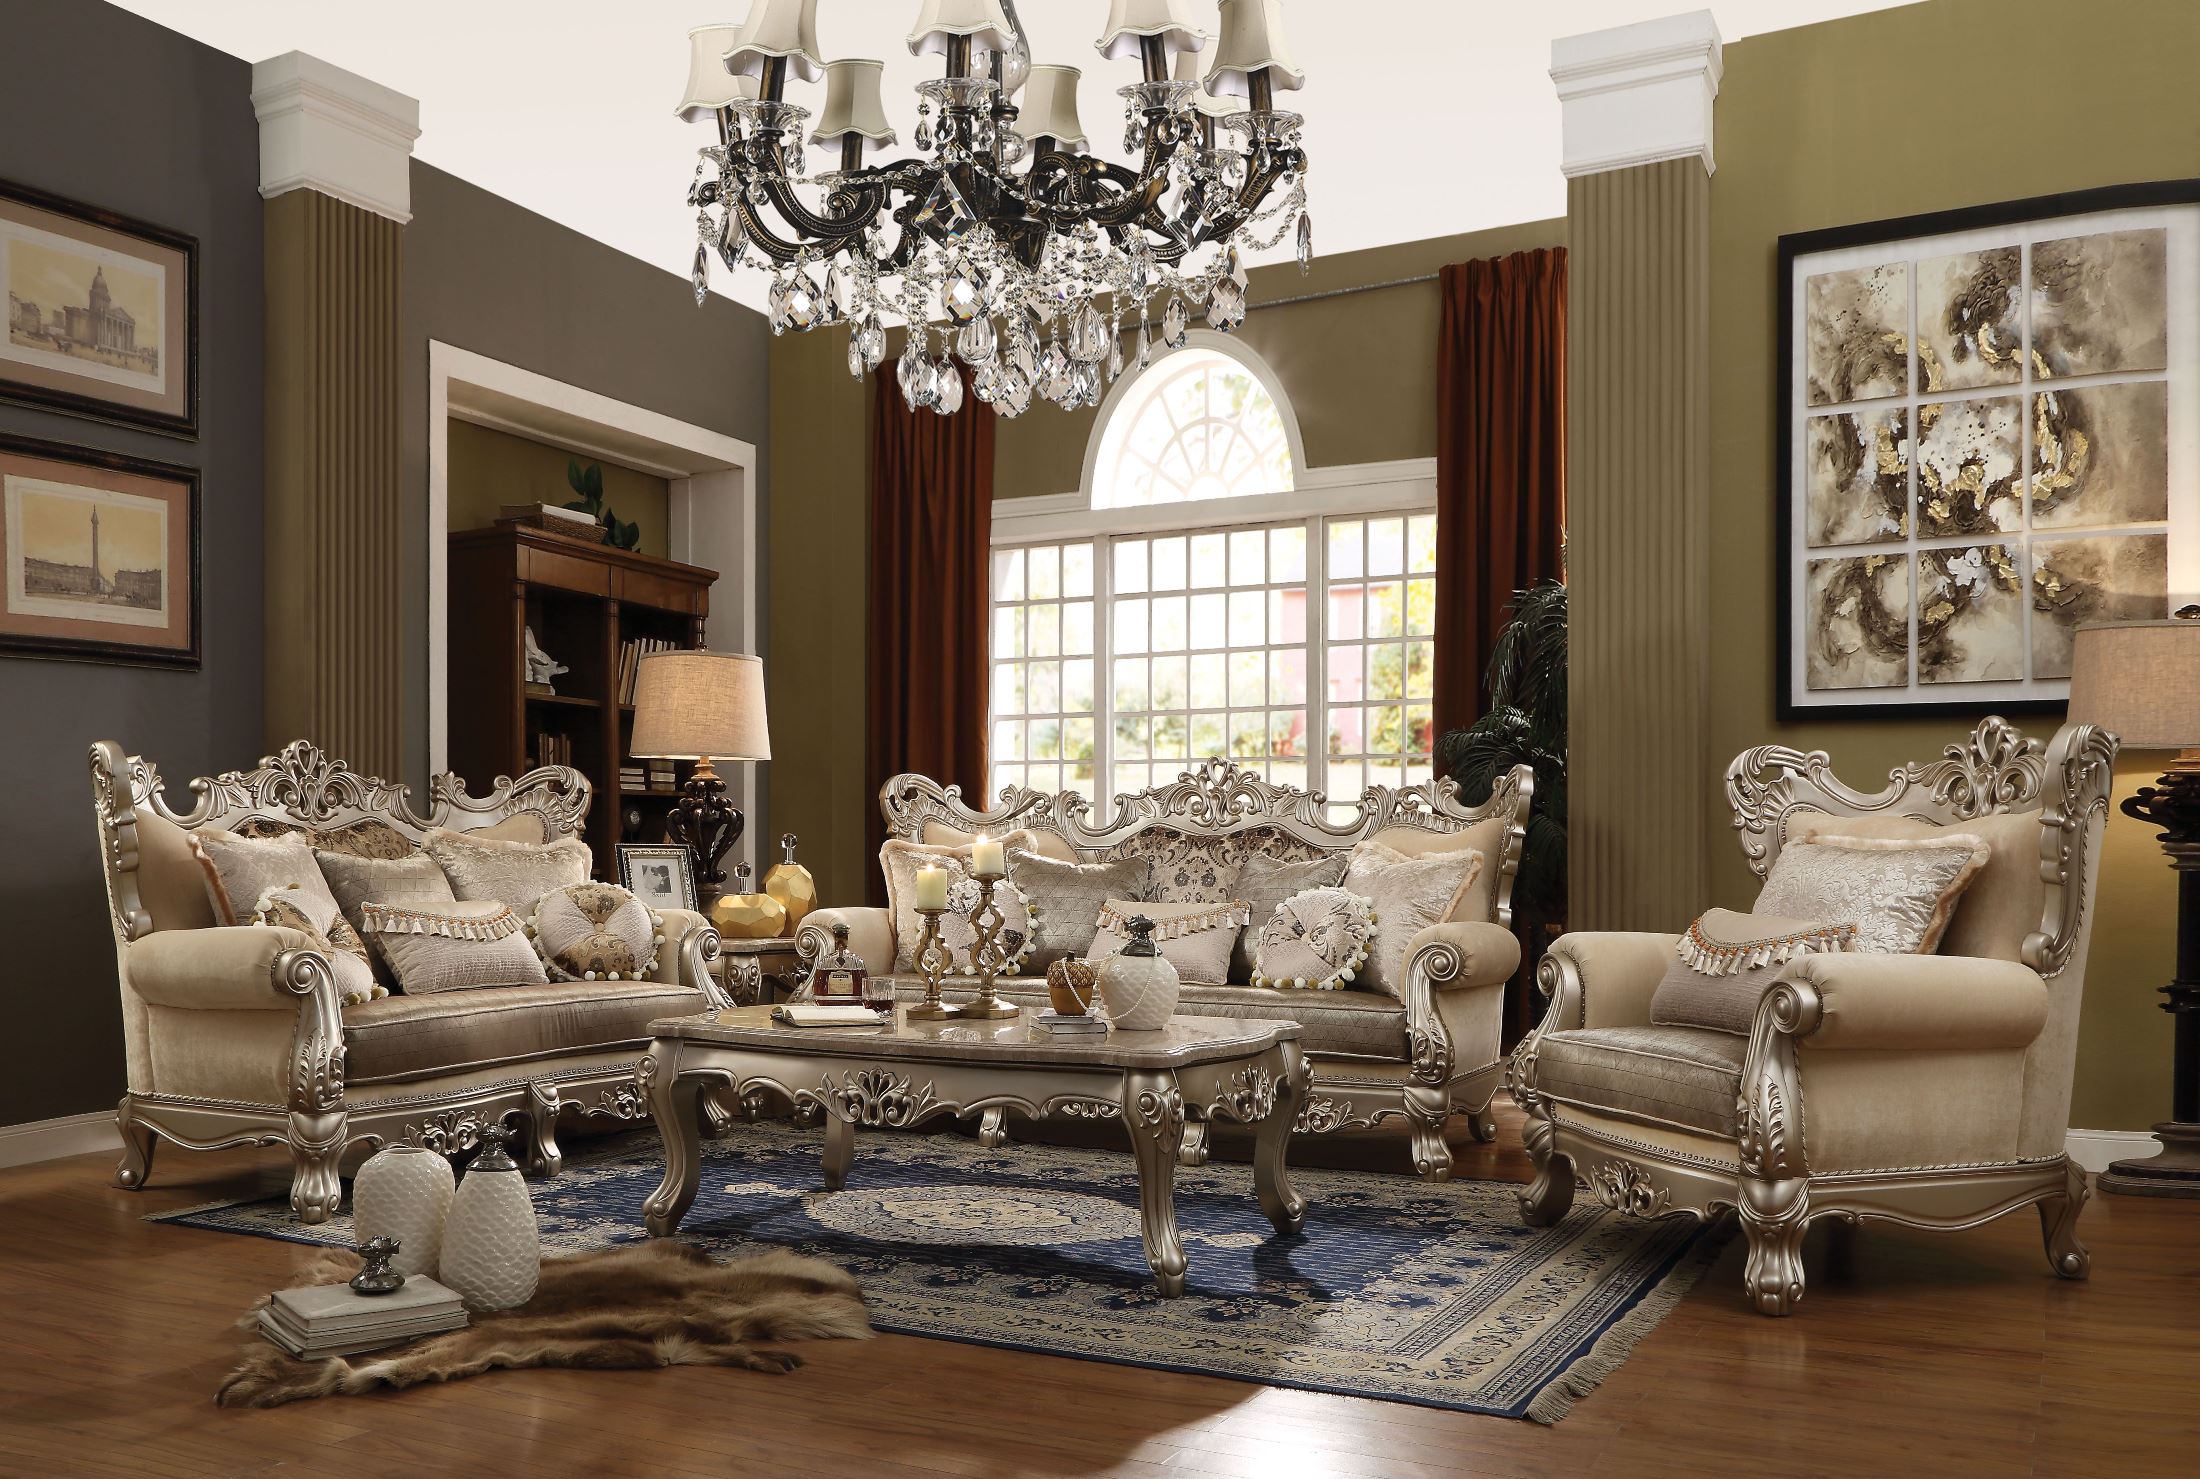 ACME Ranita Champagne Living Room Set - Ranita Collection: 6 Reviews ...